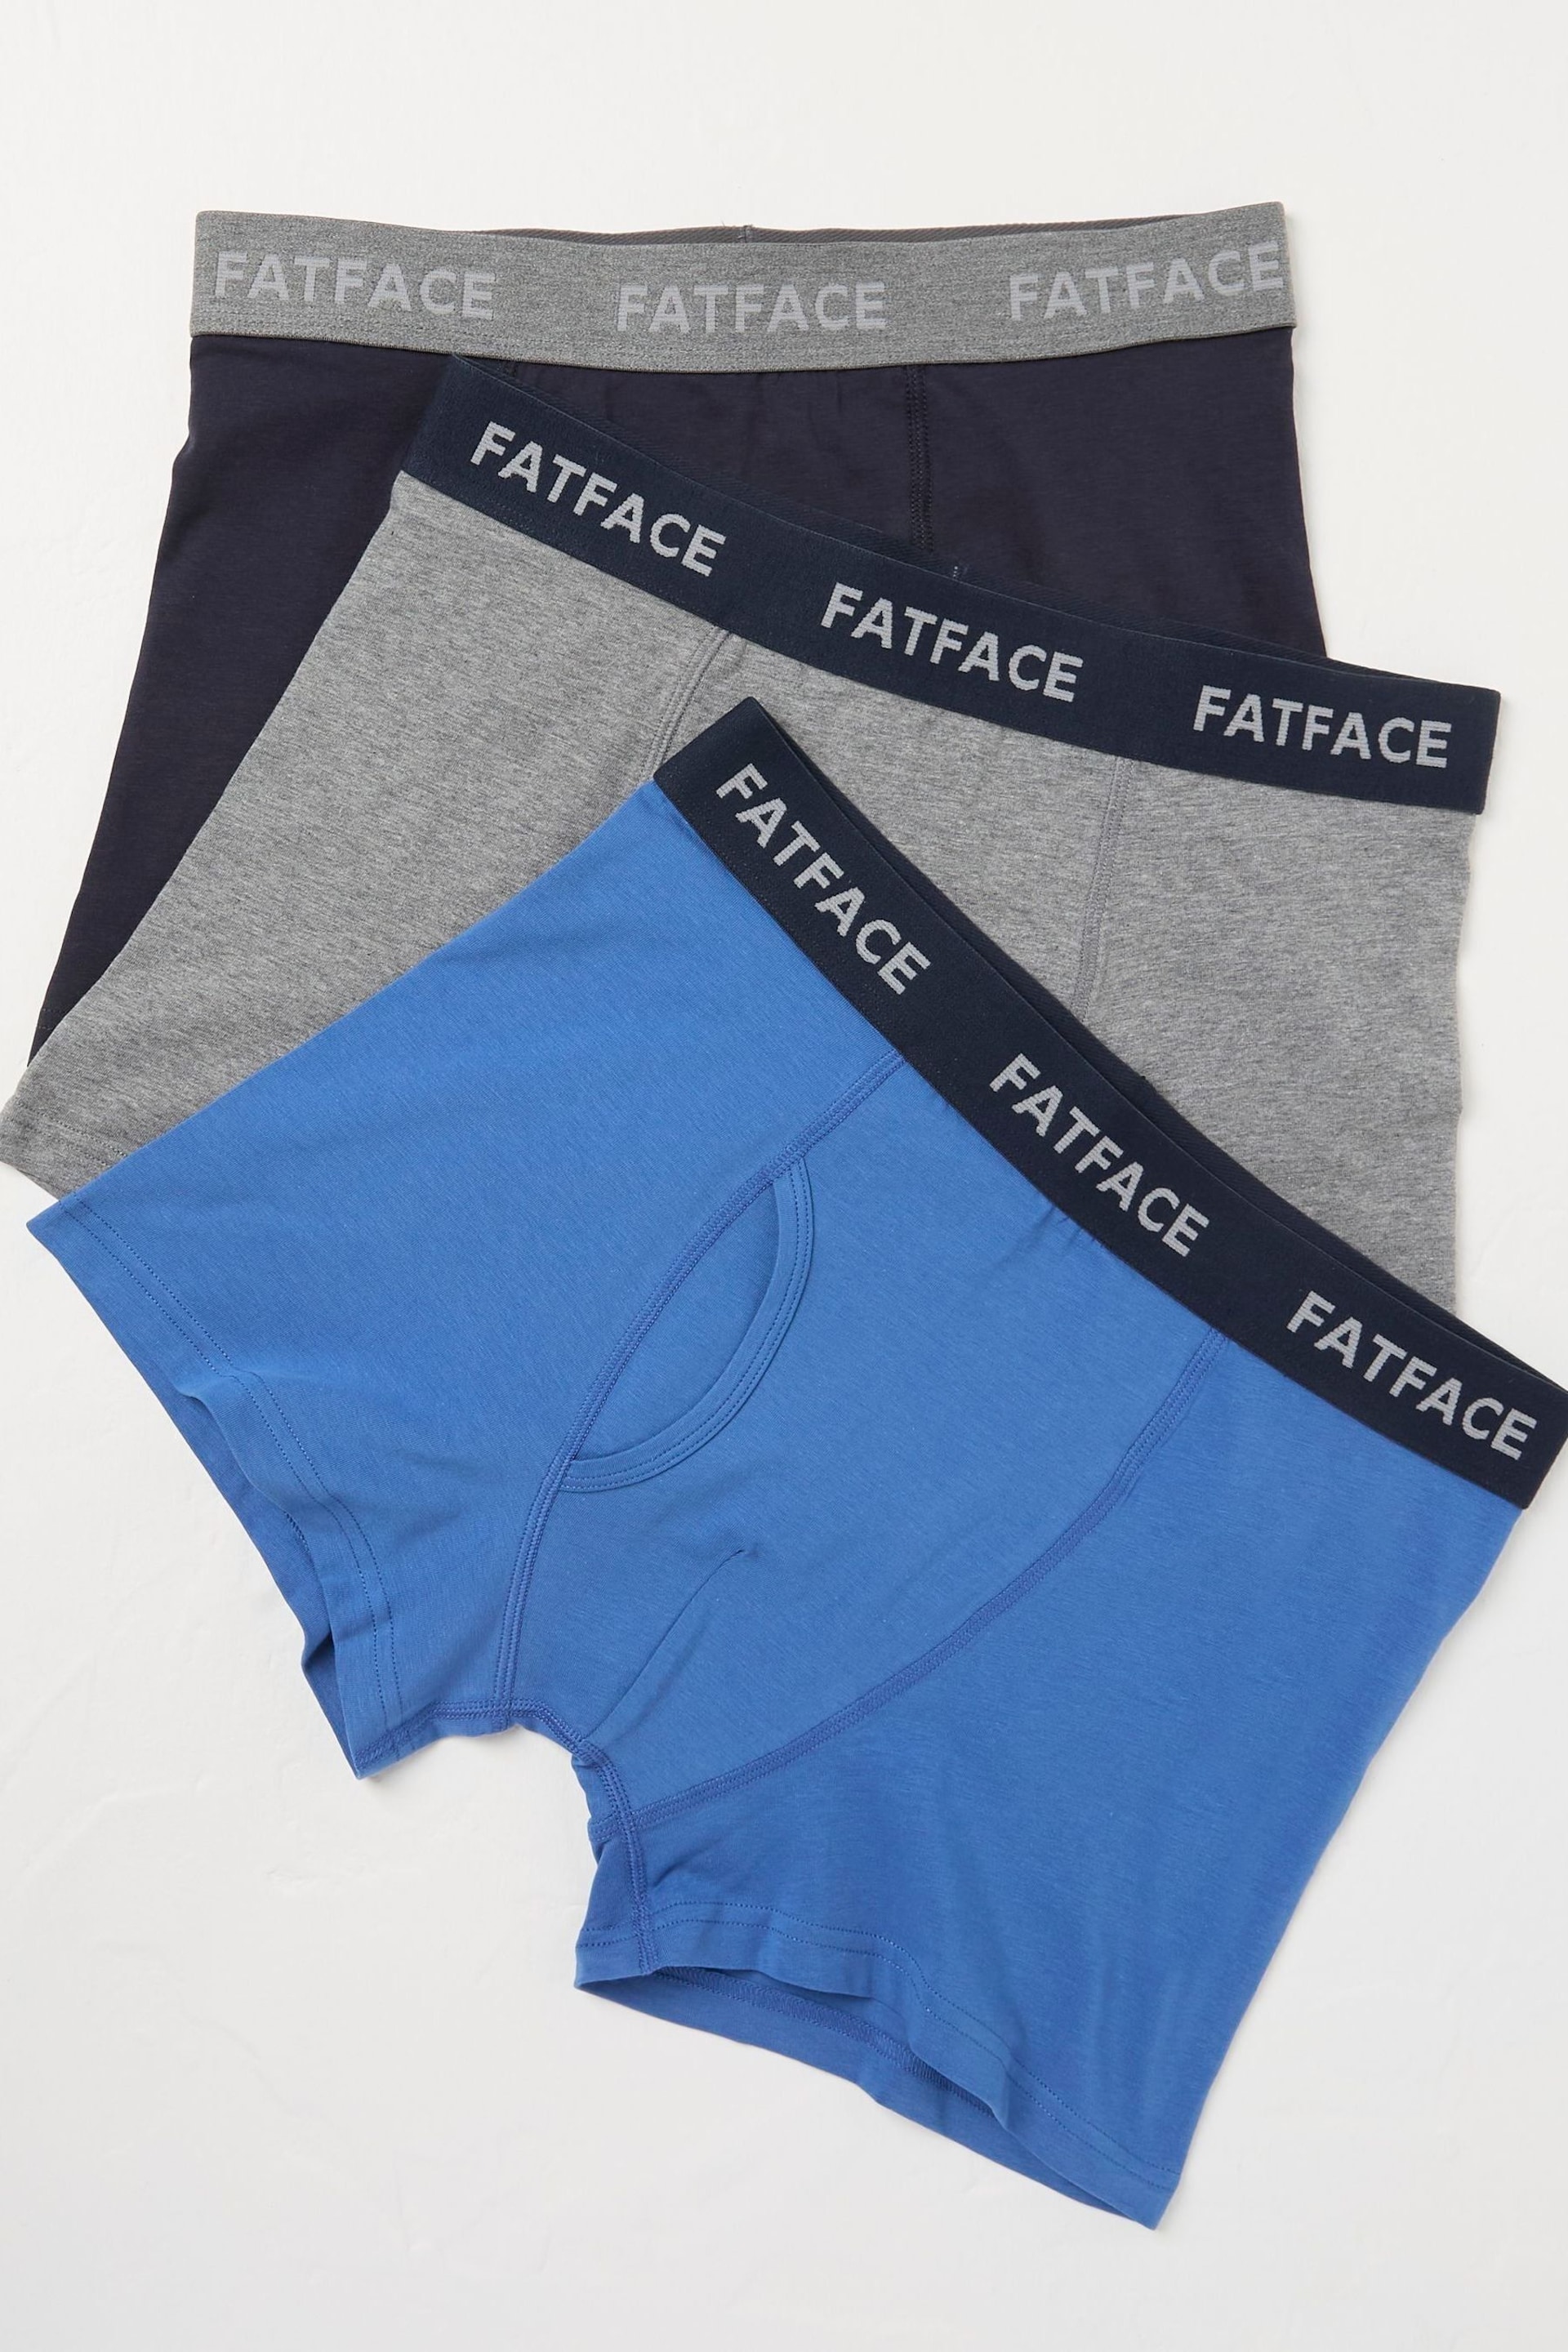 FatFace Blue Plain Boxers 3 Pack - Image 2 of 6